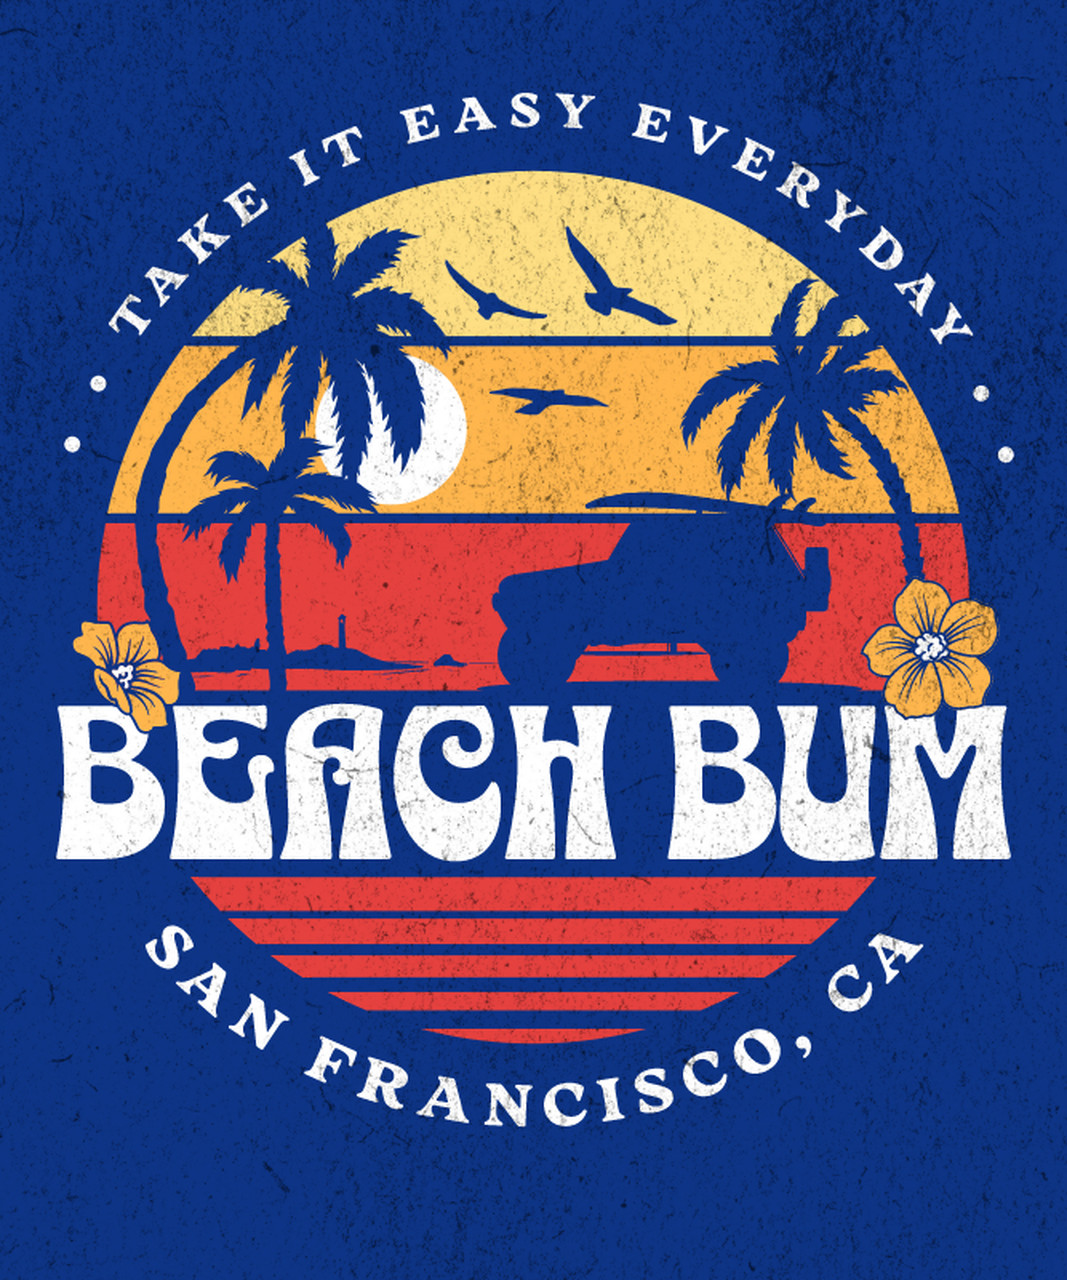 beach bum sunset surfing easy resize.com 326